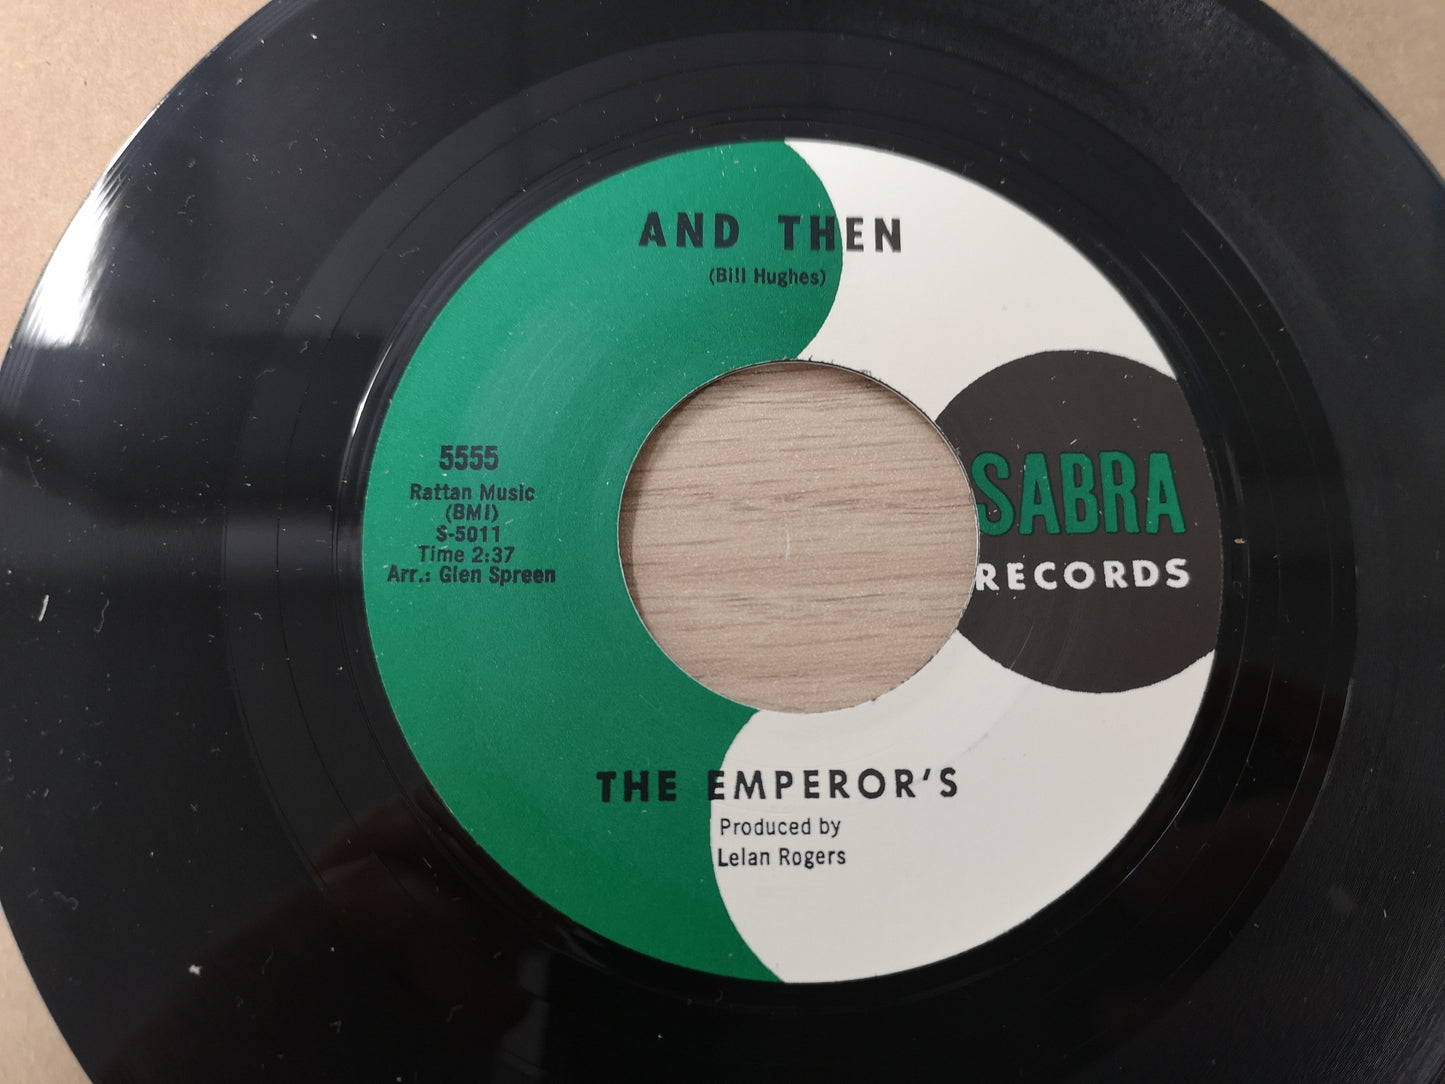 Emperor's "I Want My Woman" RE UK Mint (7" Single - '65 US Garage)